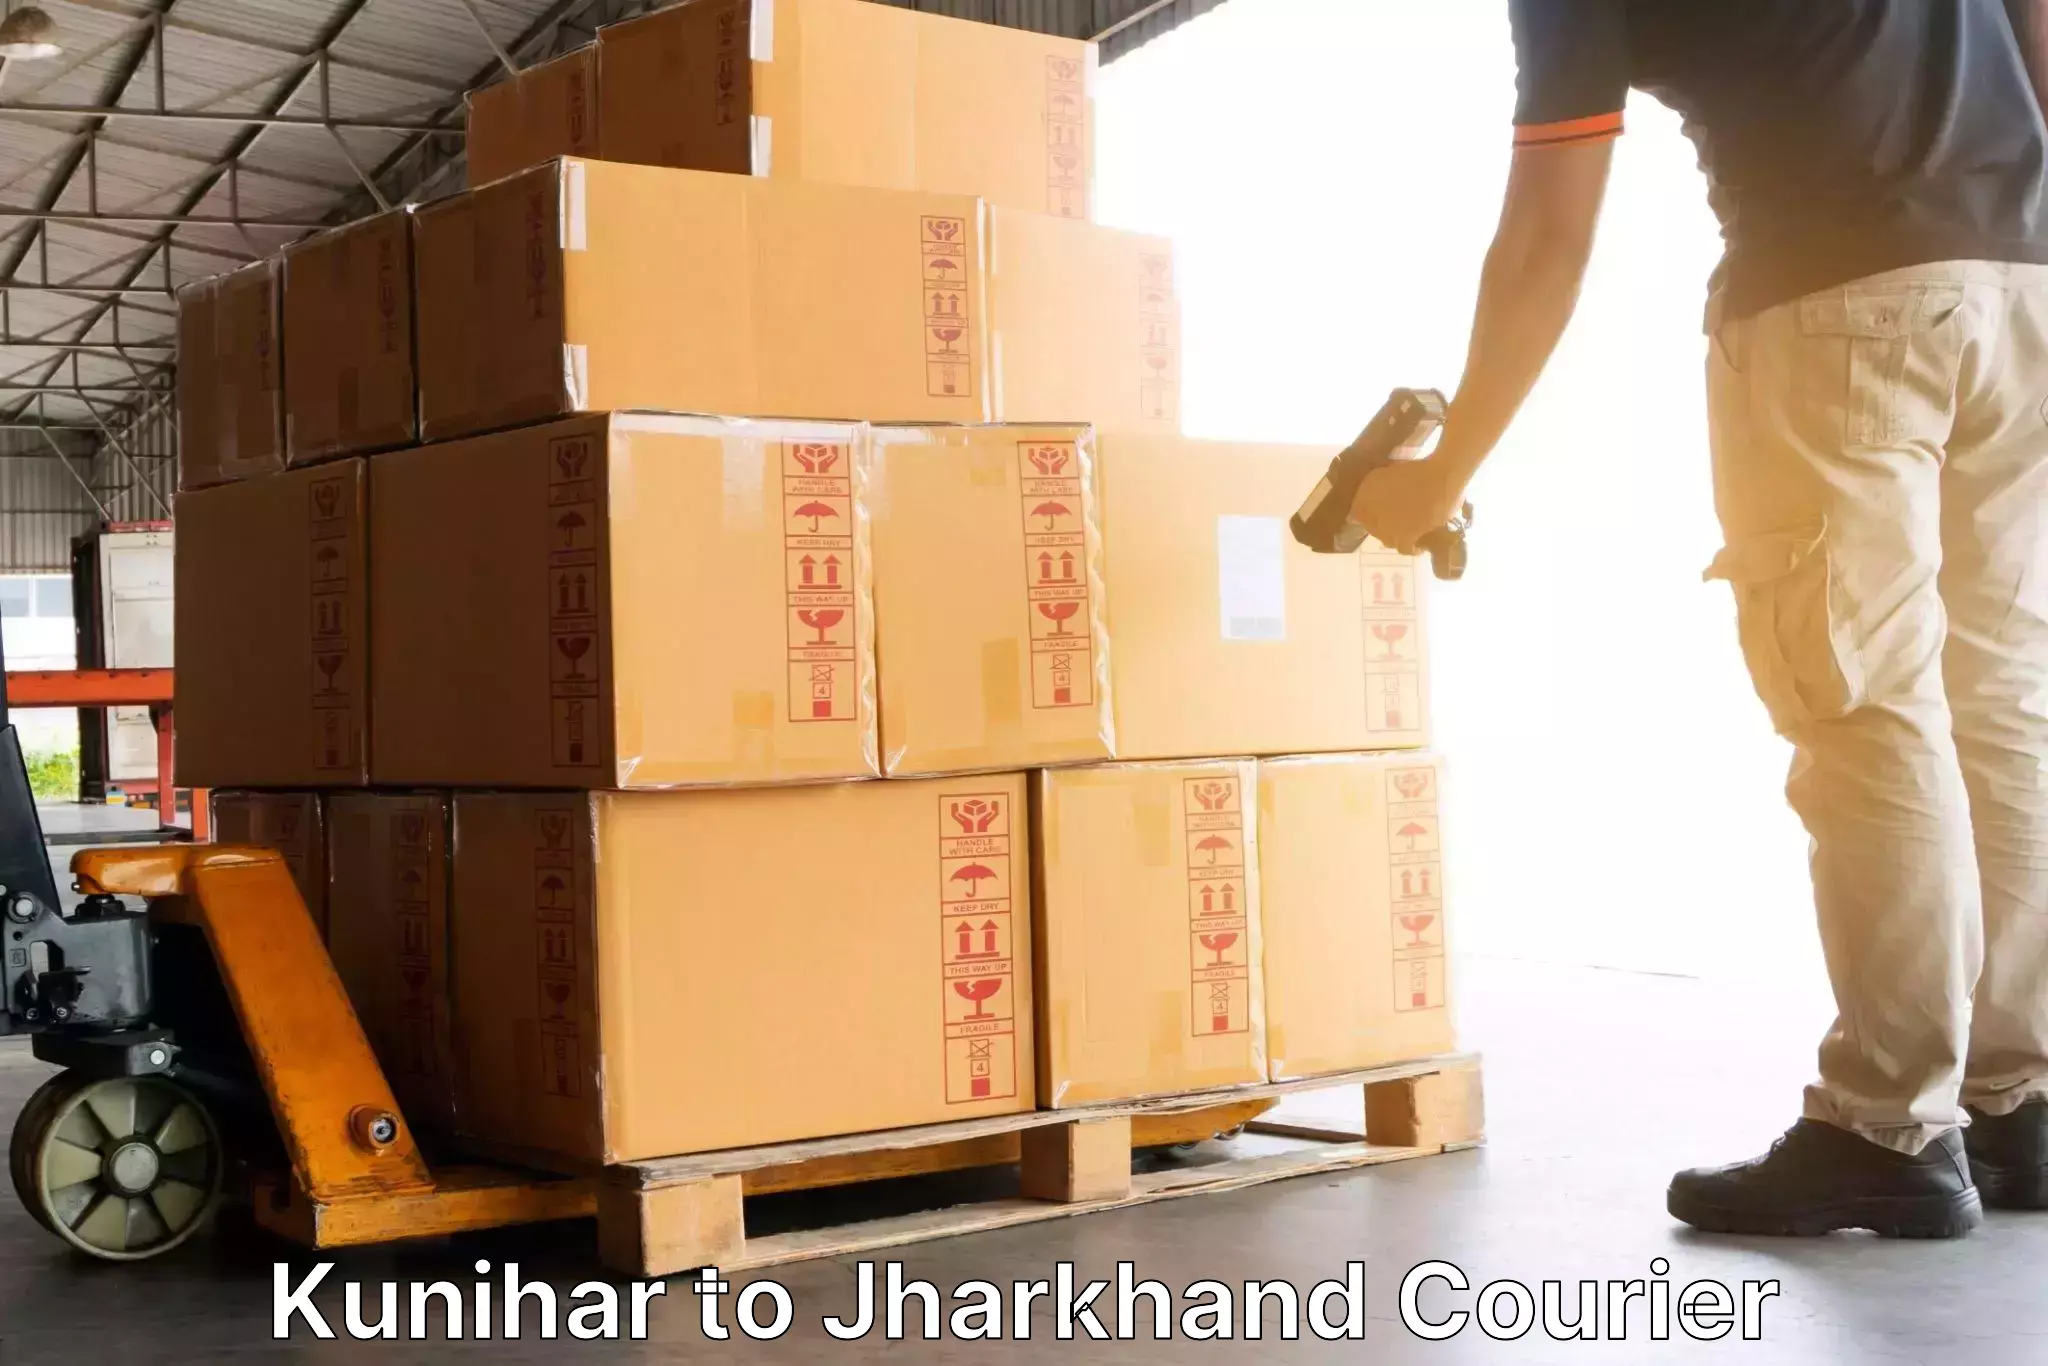 Courier service innovation Kunihar to Satbarwa